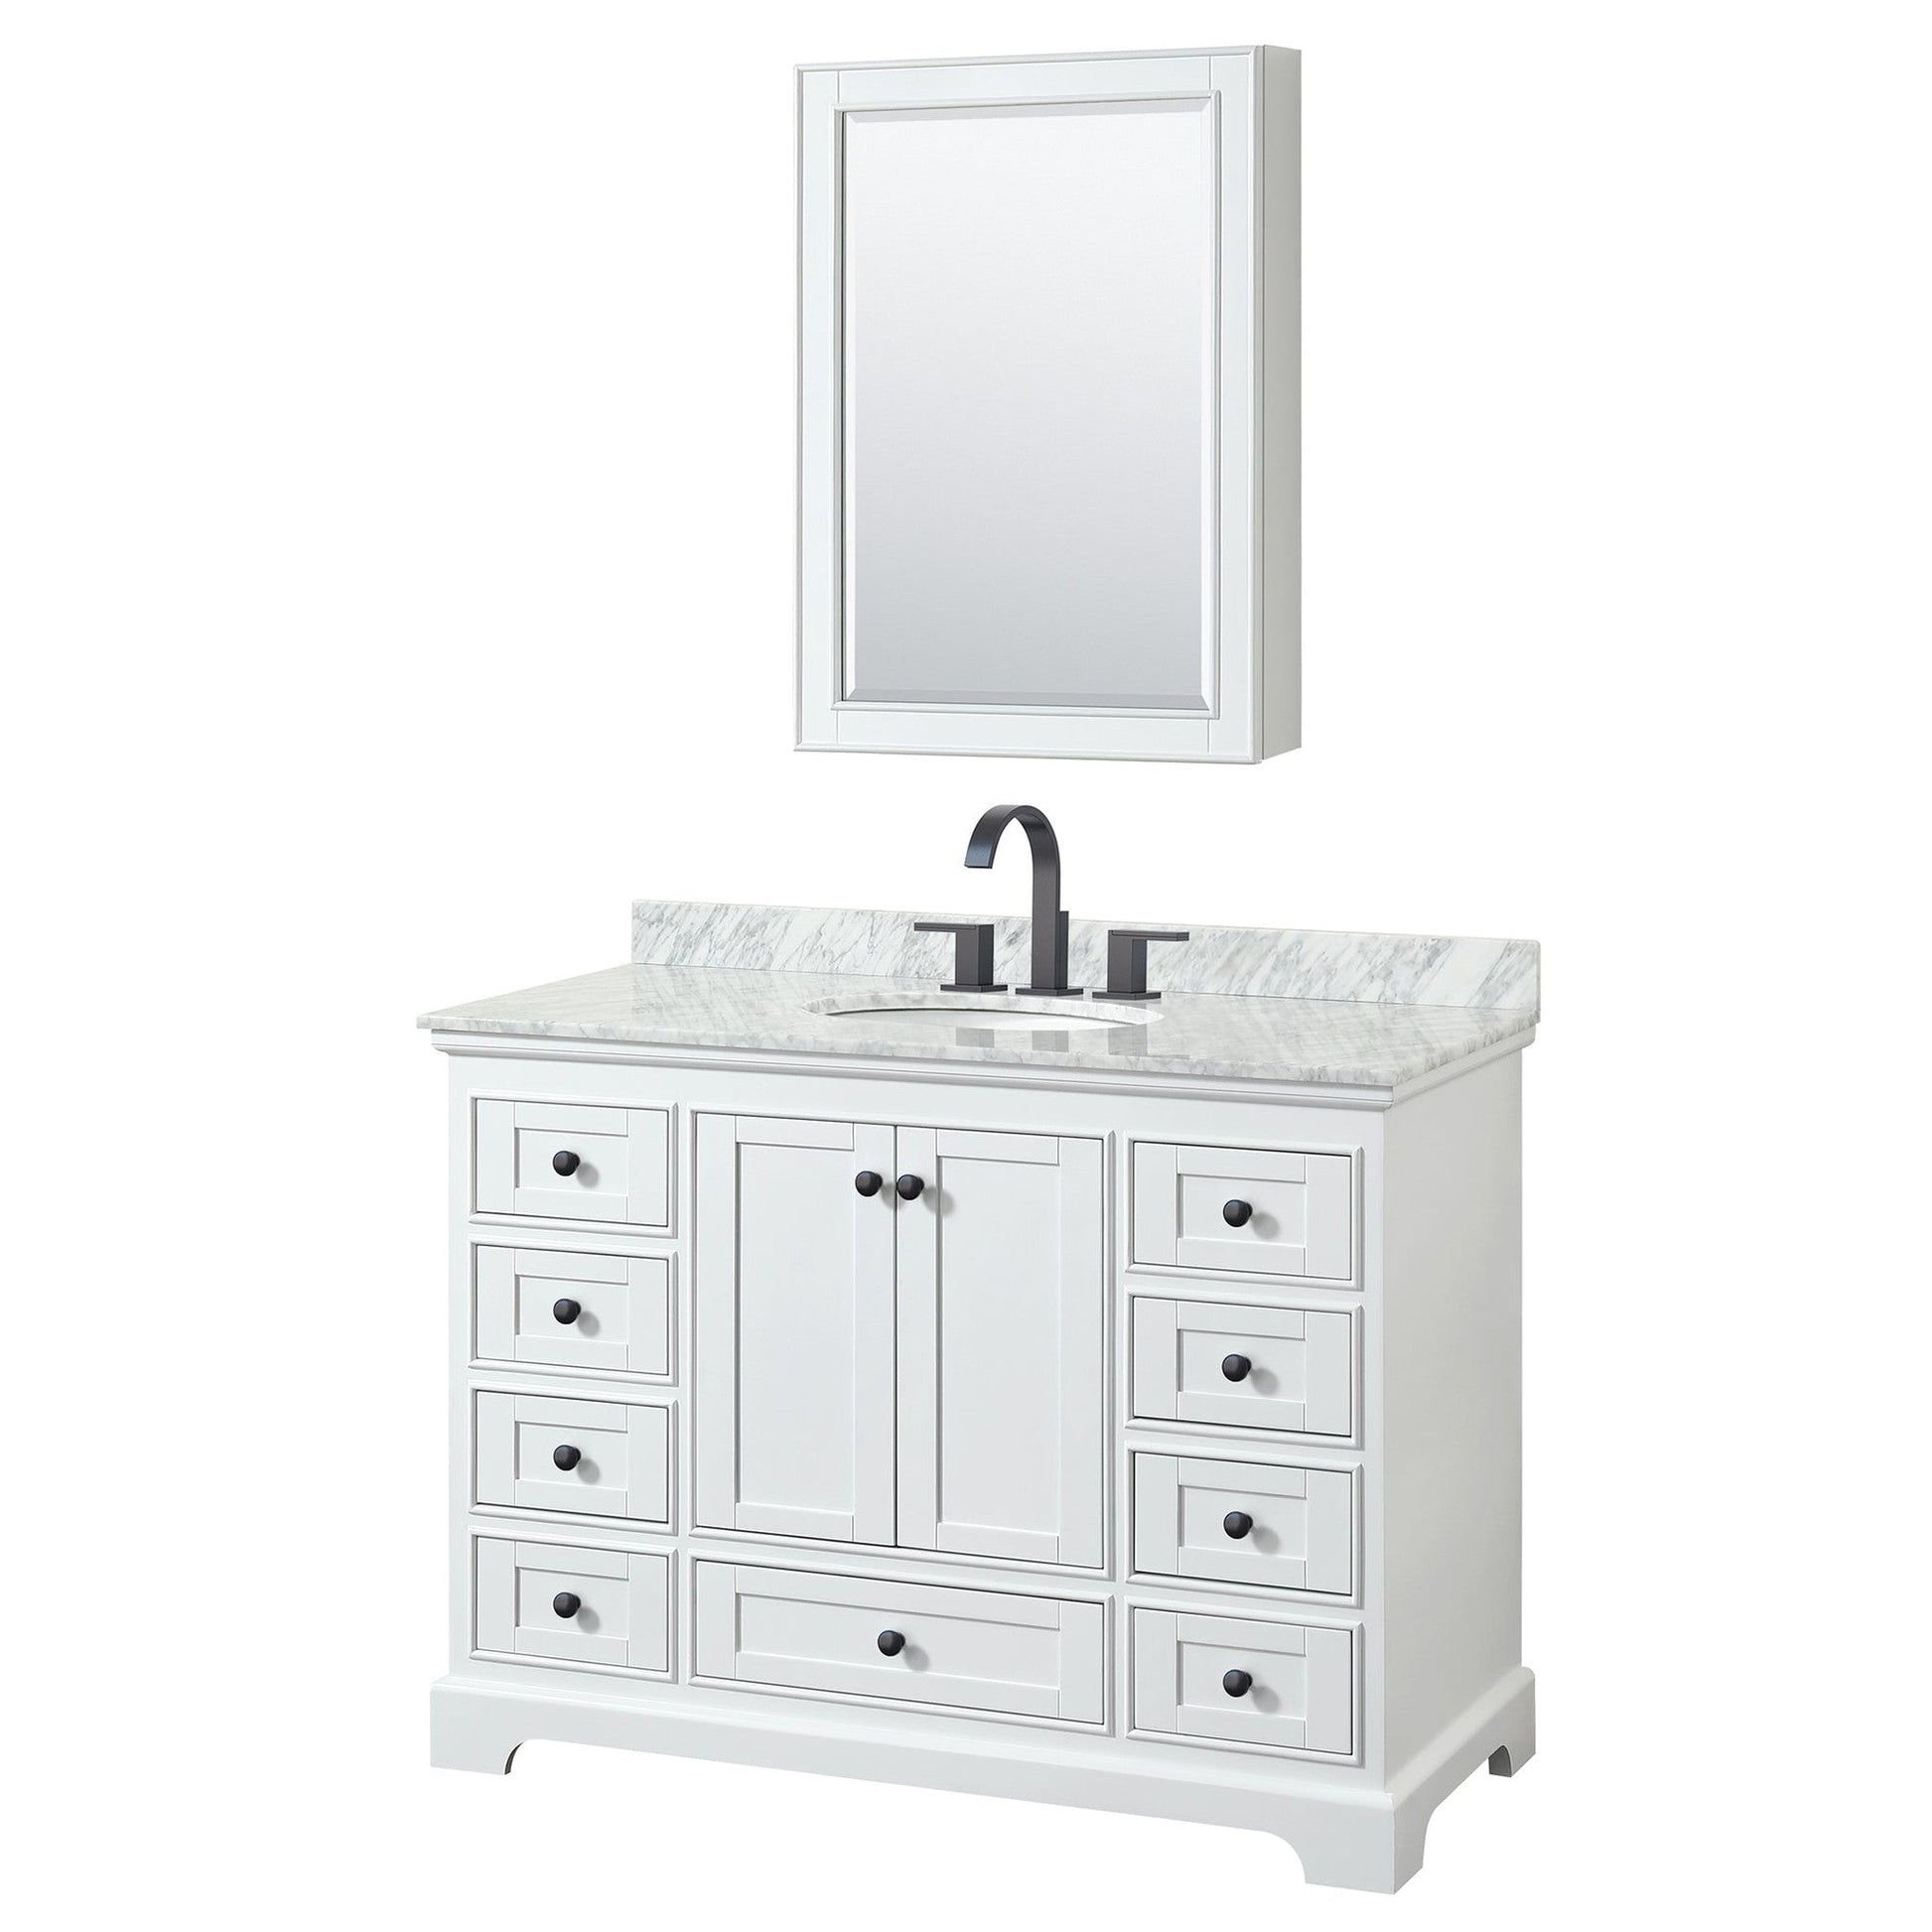 Deborah 48" Single Bathroom Vanity in White, White Carrara Marble Countertop, Undermount Oval Sink, Matte Black Trim, Medicine Cabinet